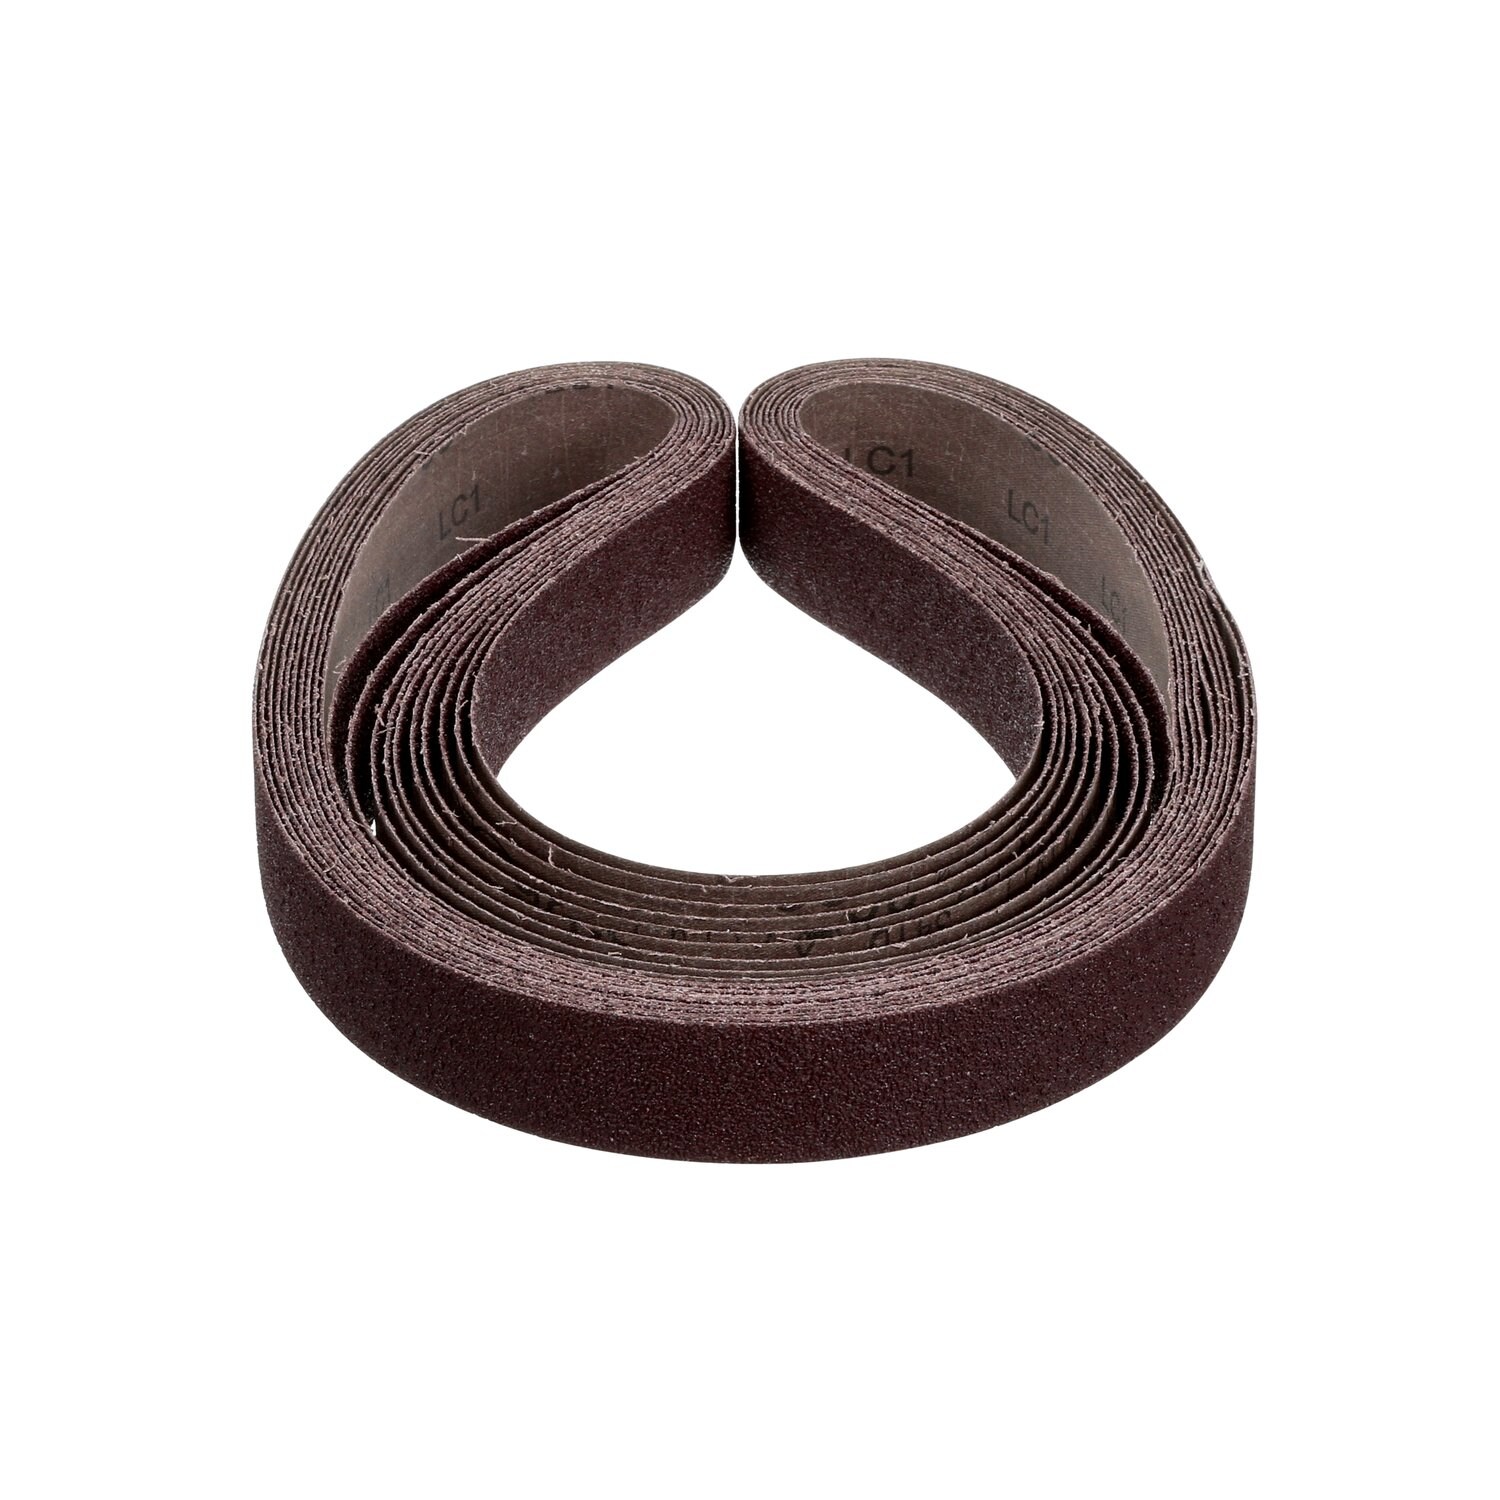 7010326496 - 3M Cloth Belt 341D, 60 X-weight, 1 in x 42 in, Film-lok, Single-flex,
200 ea/Case